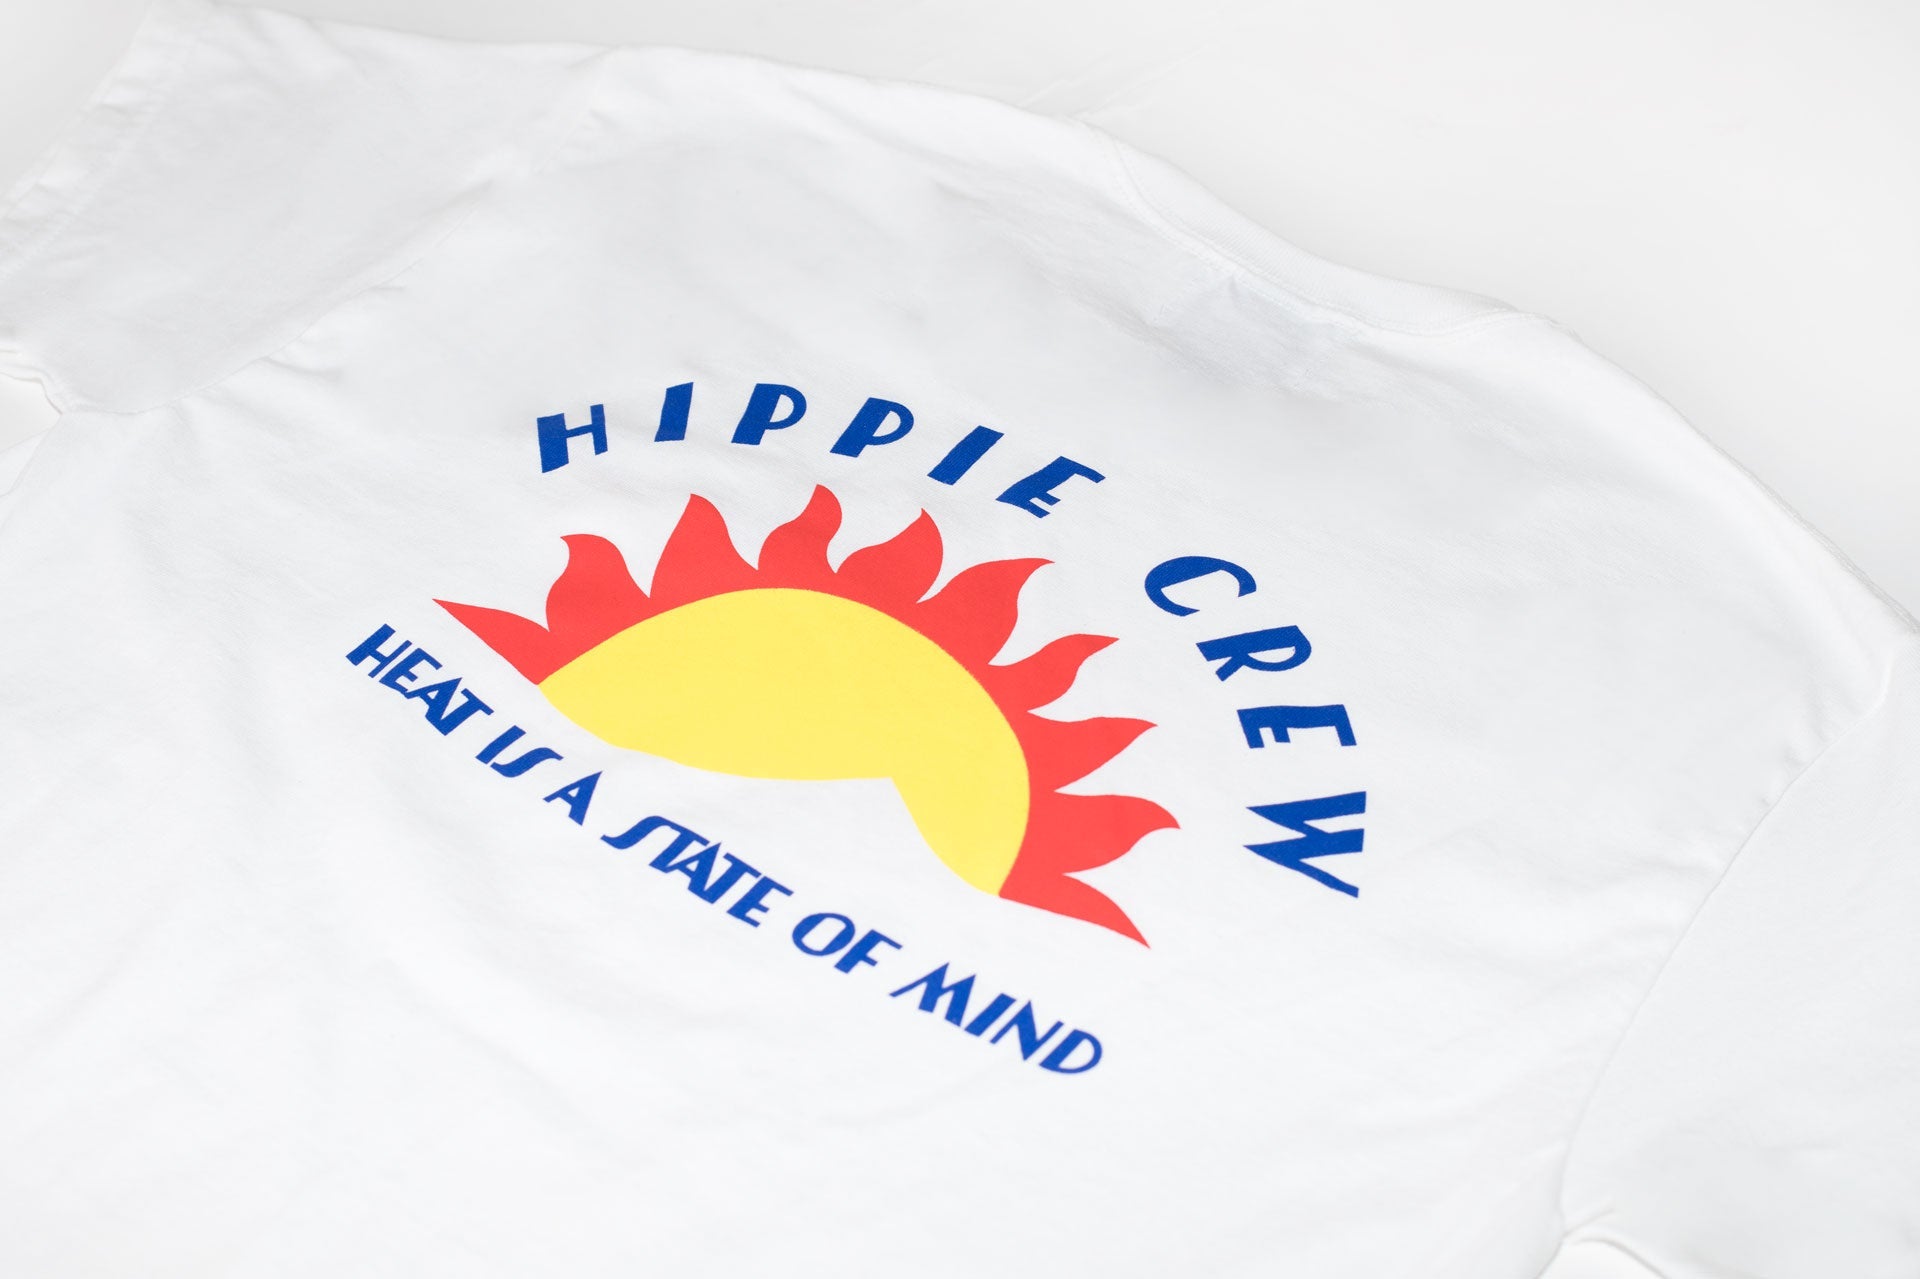 Camiseta Heat Hippie blanca Hippie Crew